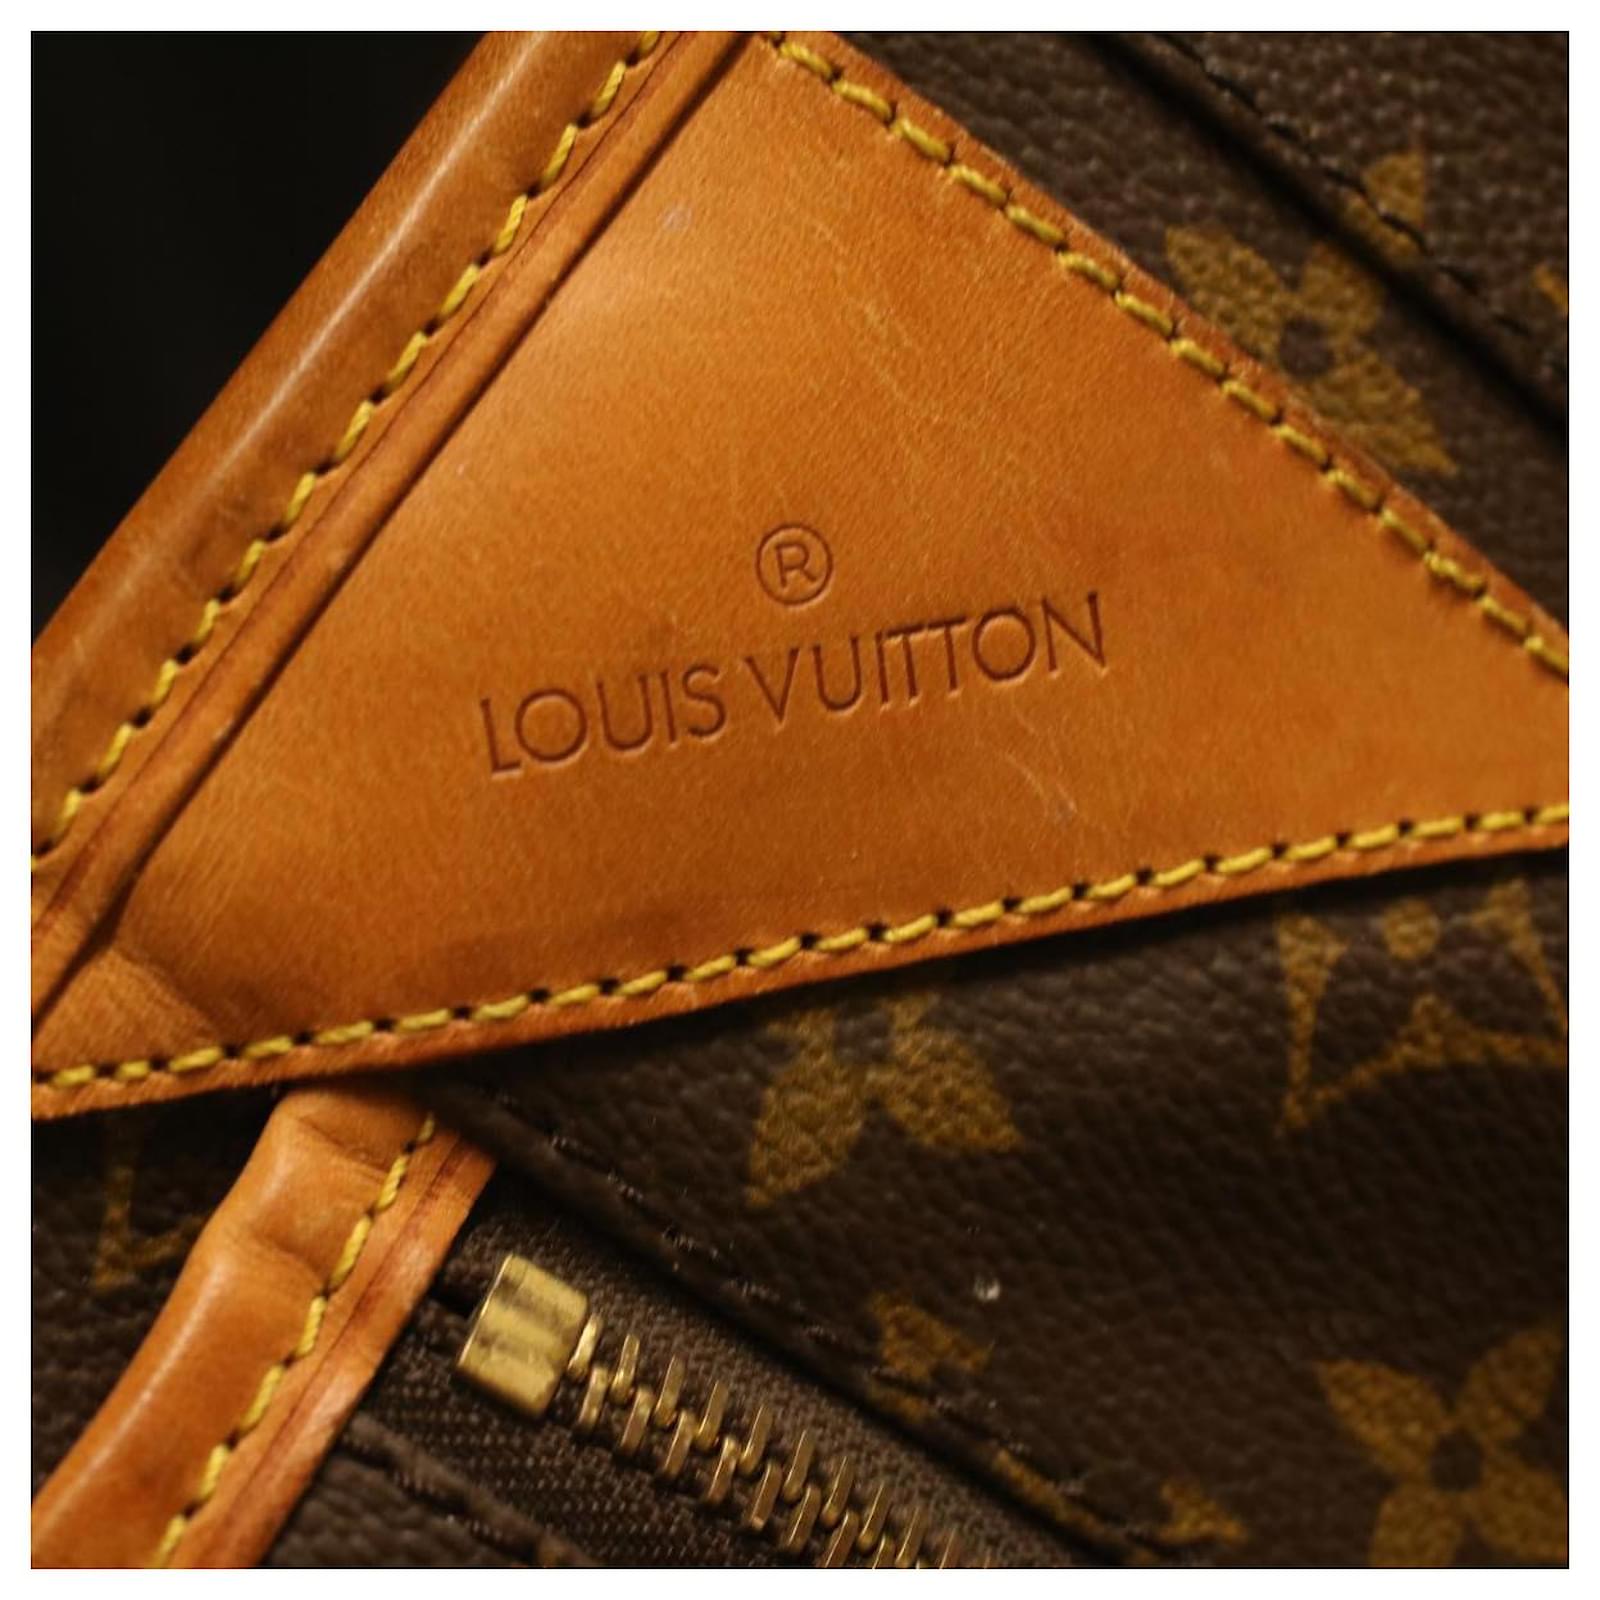 Louis Vuitton LUISE VUITTON MONOGRAM ADMIRAL JACKET